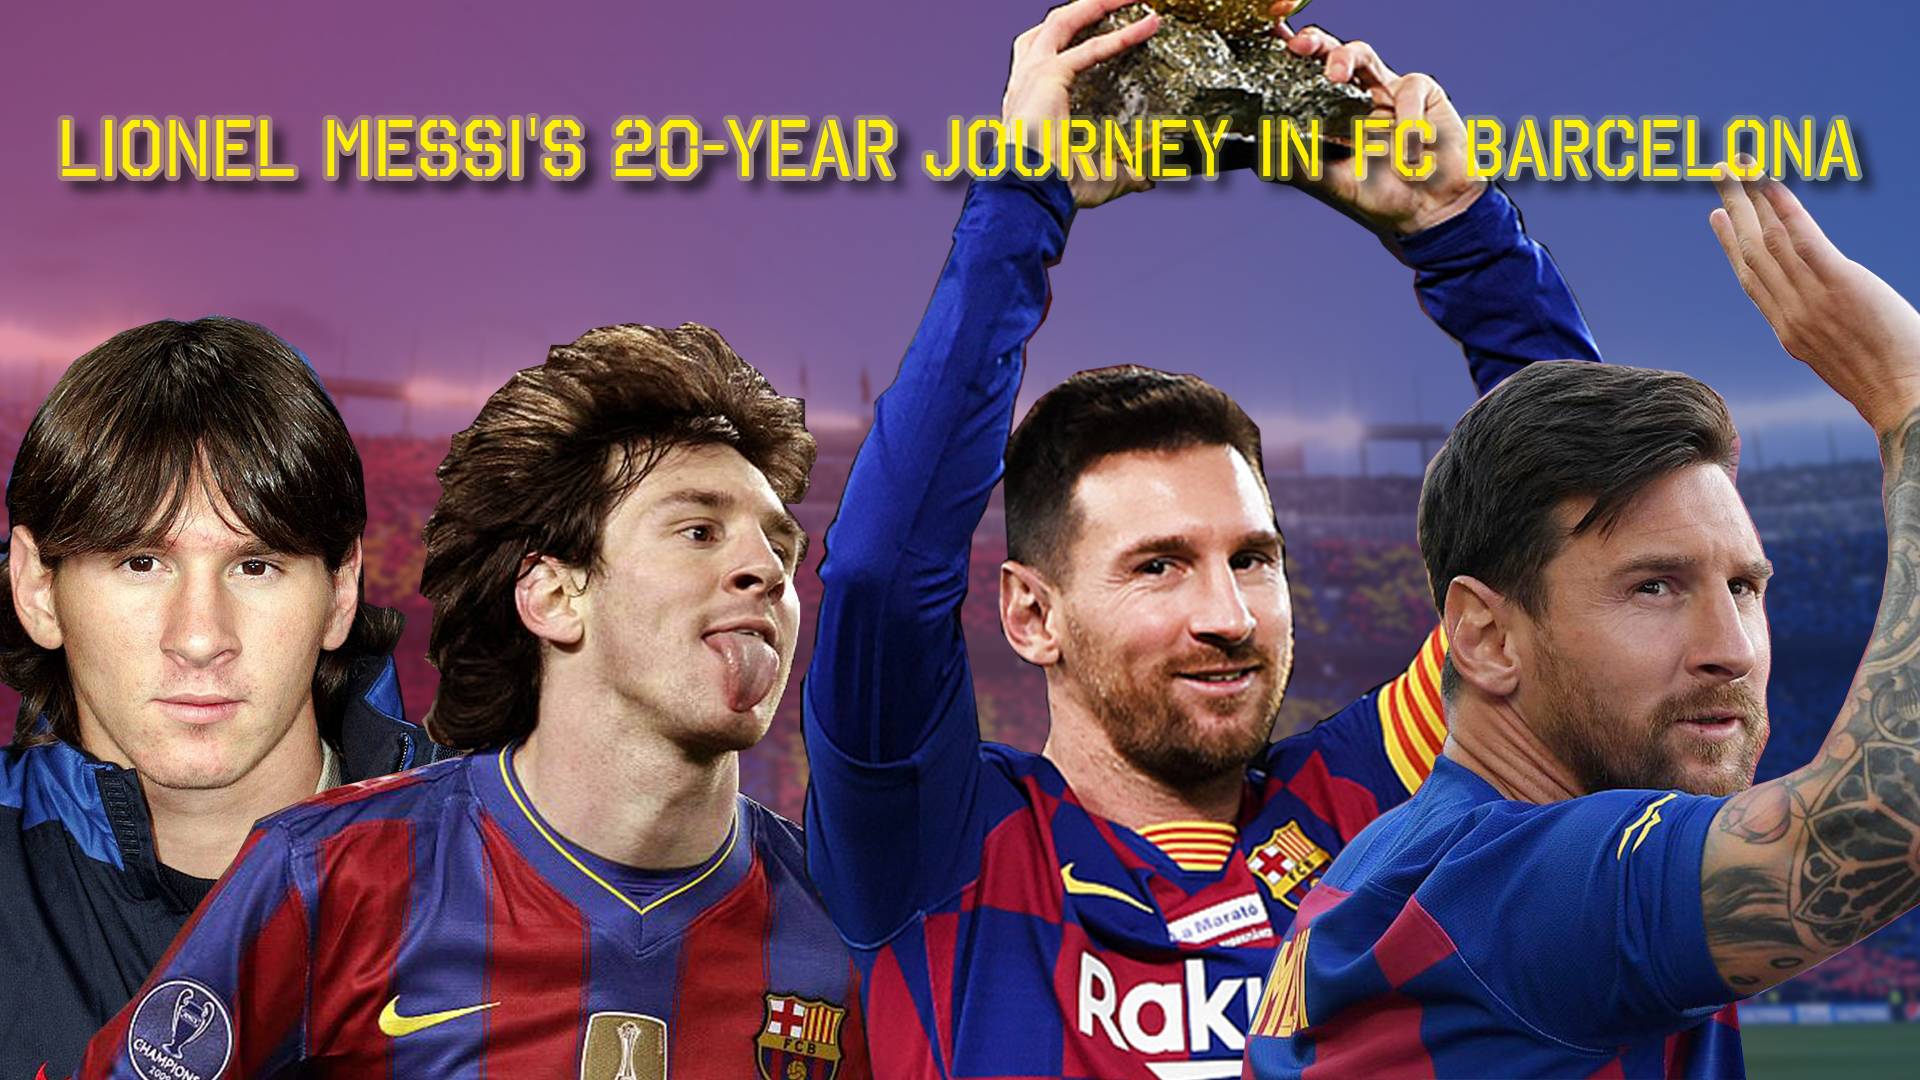 Identificeren Bloeien team Lionel Messi's 20-year journey in FC Barcelona - CGTN